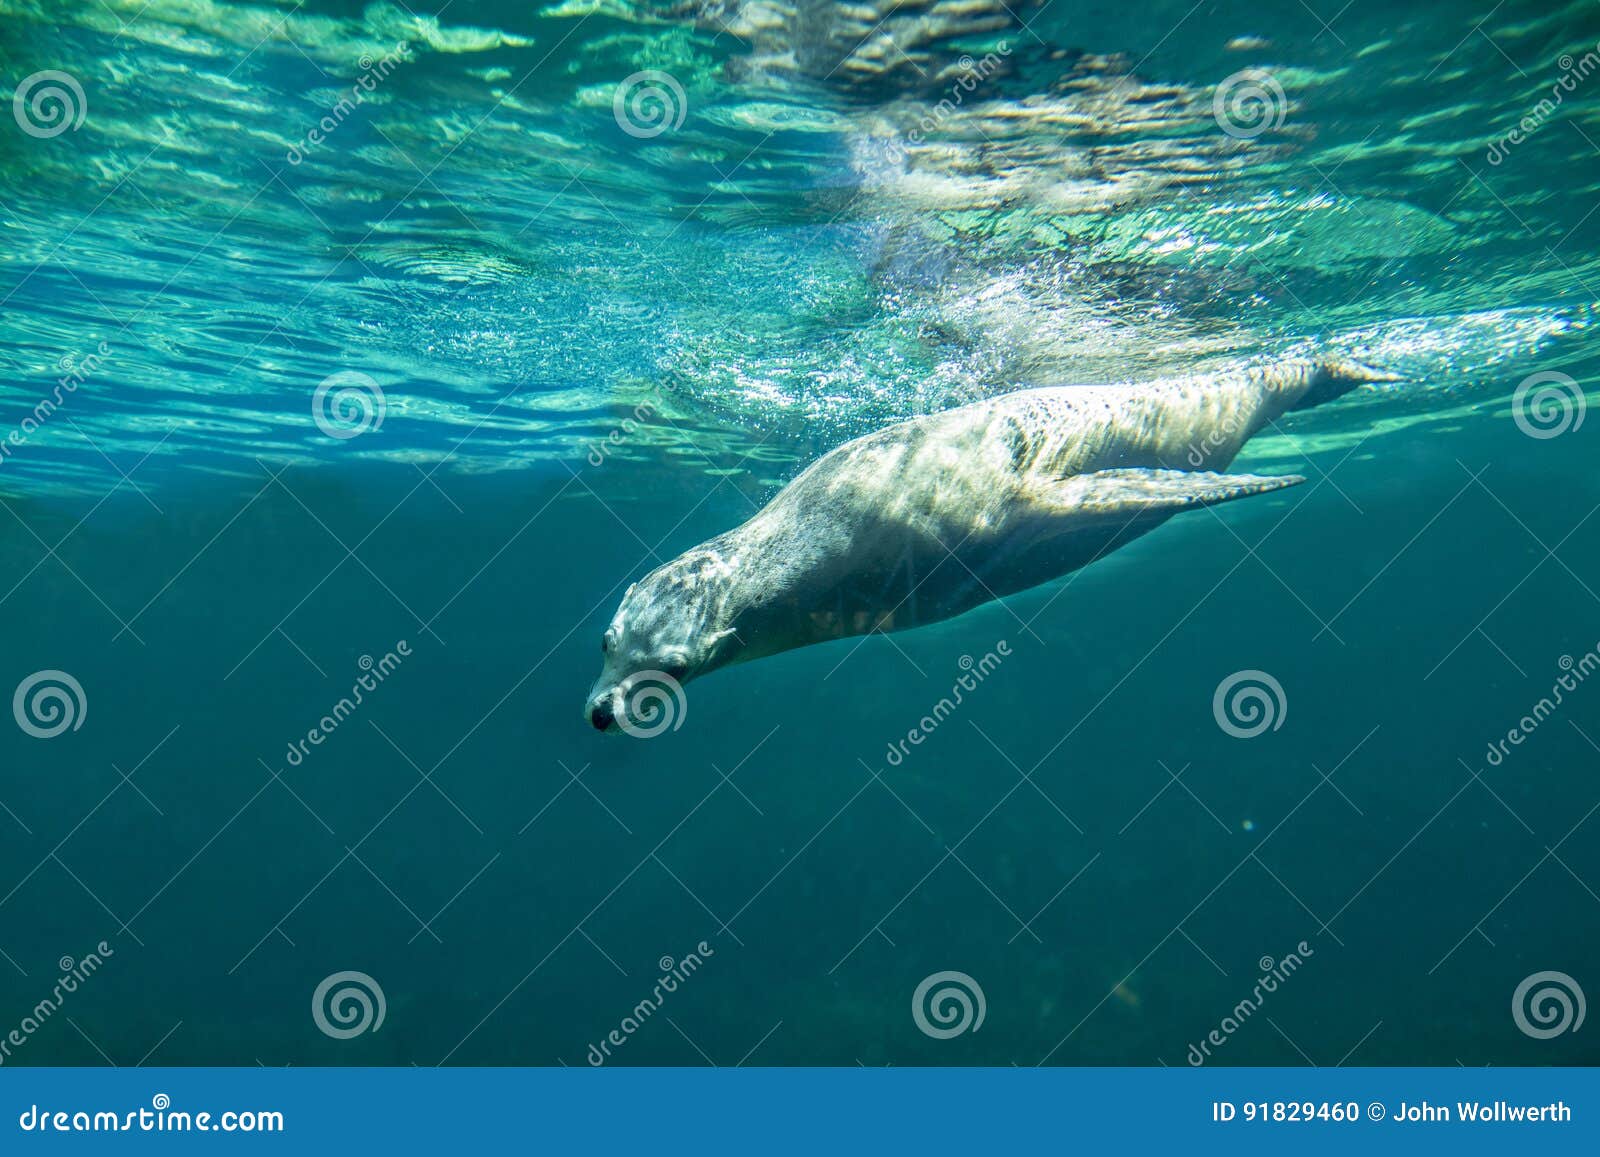 californian sea lion zalophus californianus swimming underwate